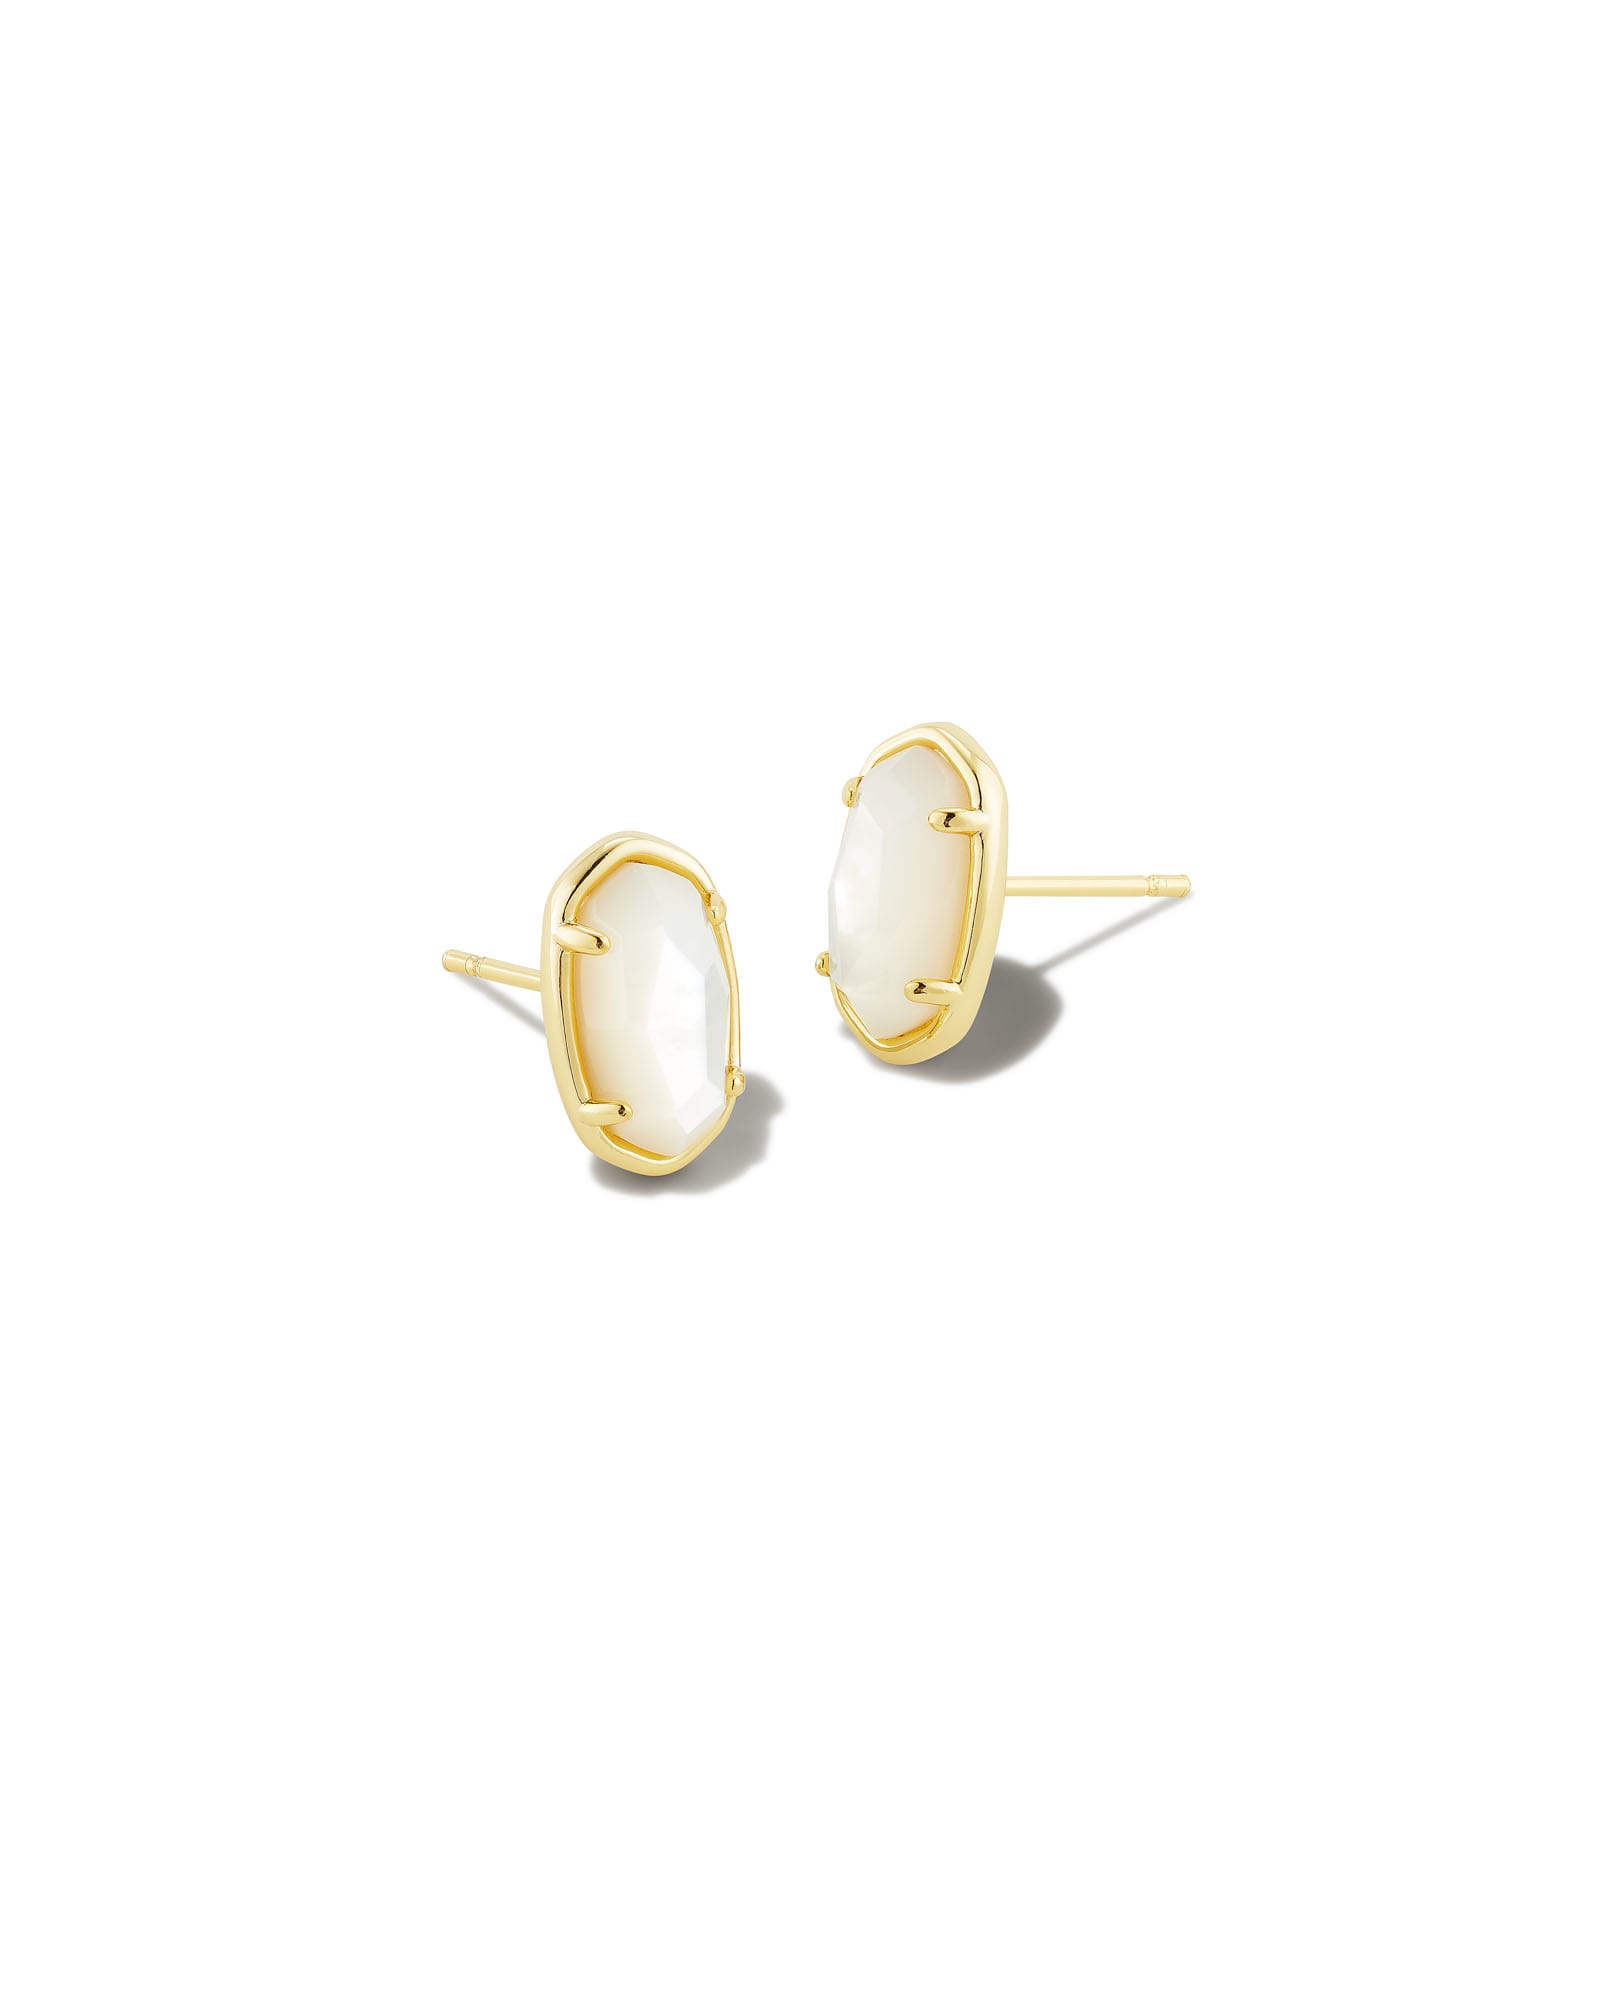 Grayson Gold Stud Earrings in Ivory Mother-of-Pearl | Kendra Scott